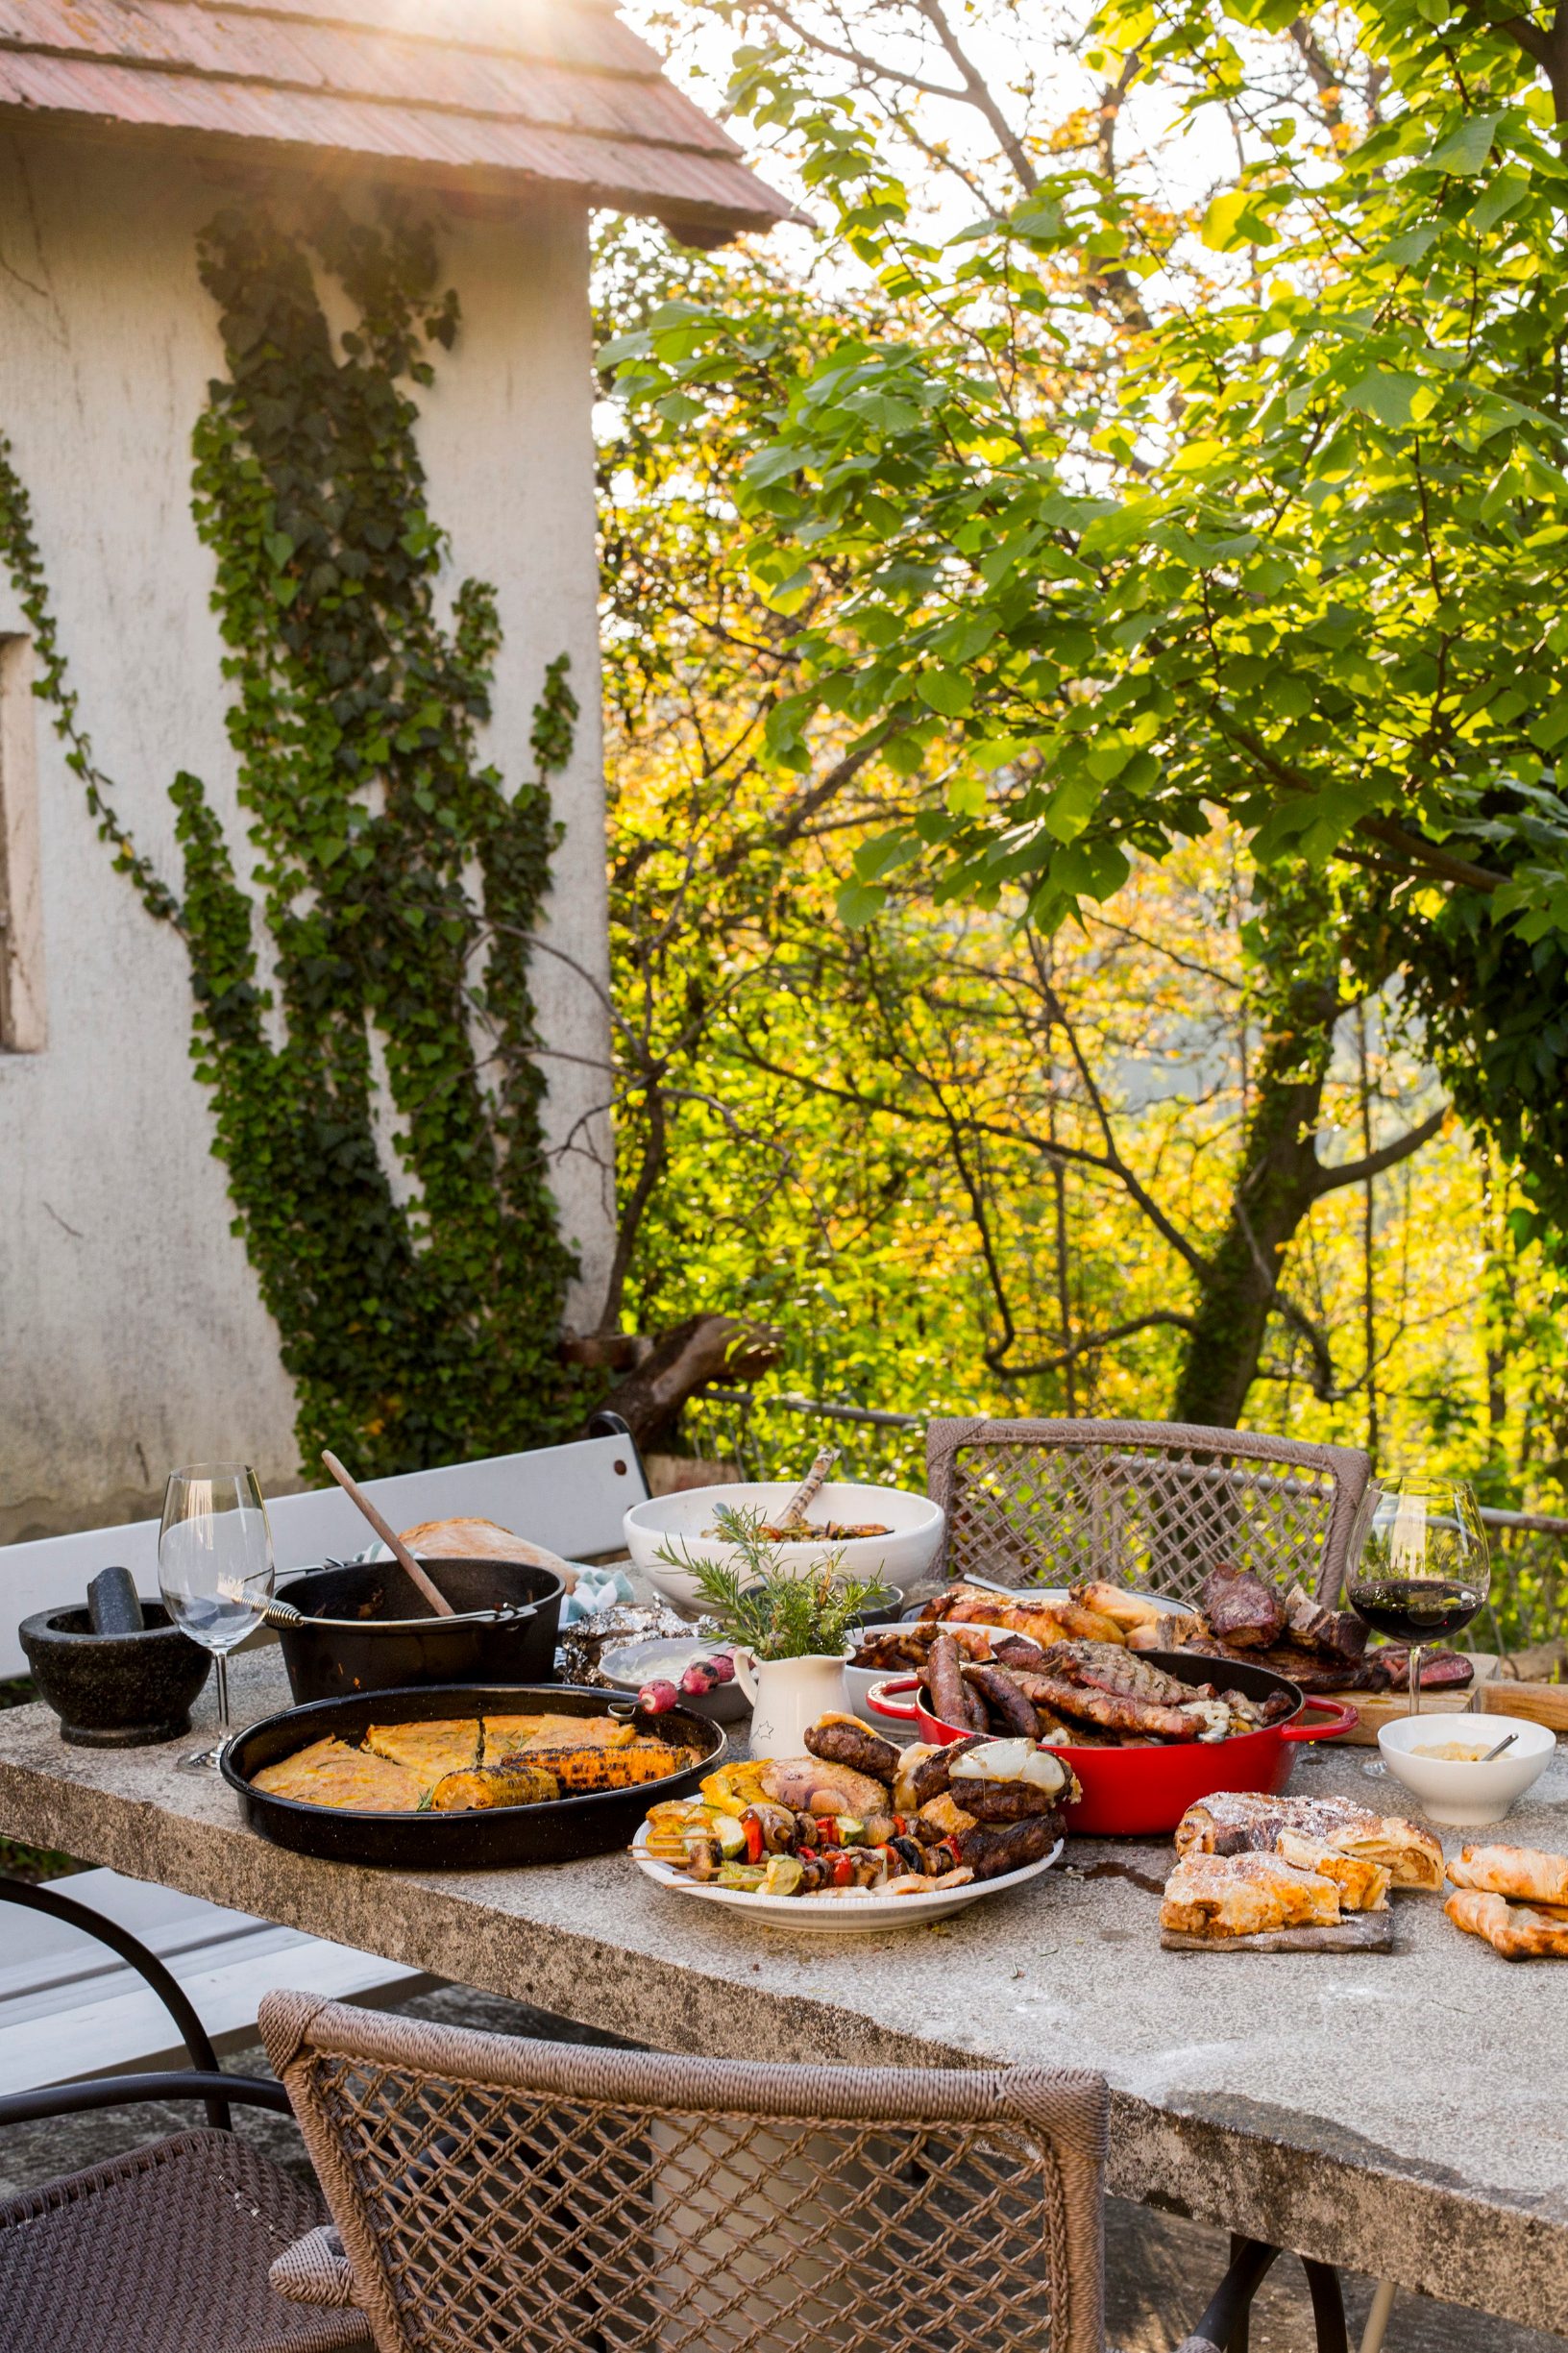 Zagreb, 240420
Vrste rostilja i priprema jela prema receptima Zorana Simunica iz Gastronomada.
Foto: Berislava Picek/ CROPIX